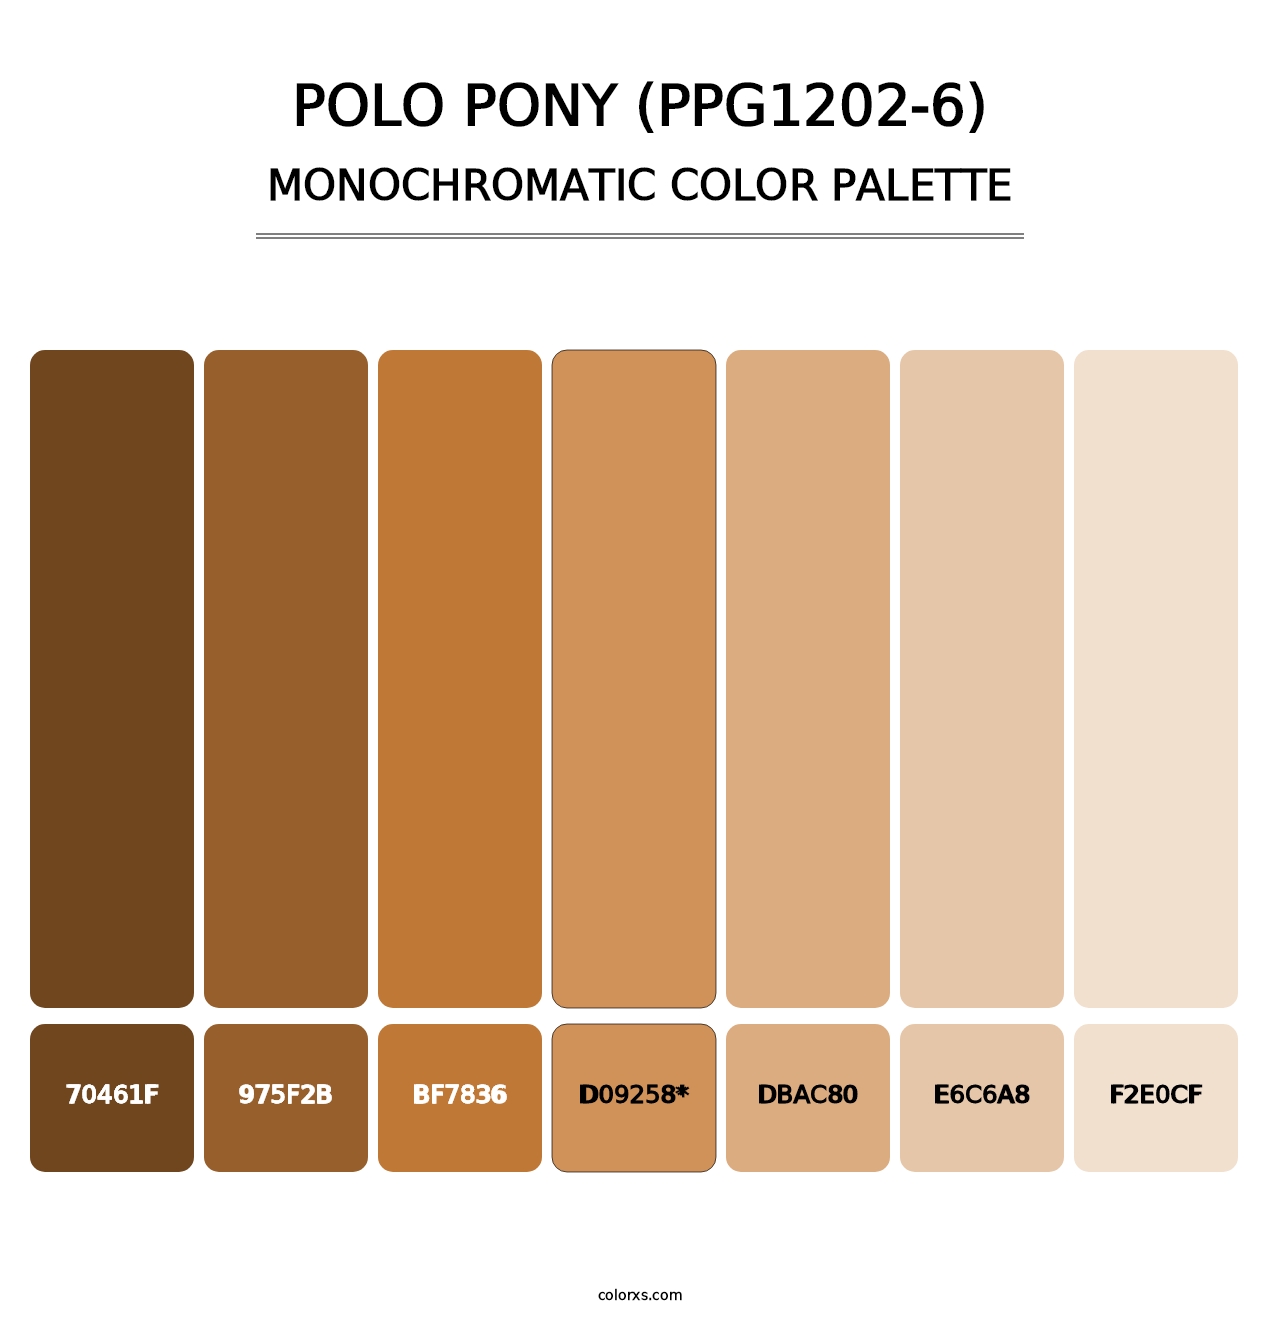 Polo Pony (PPG1202-6) - Monochromatic Color Palette